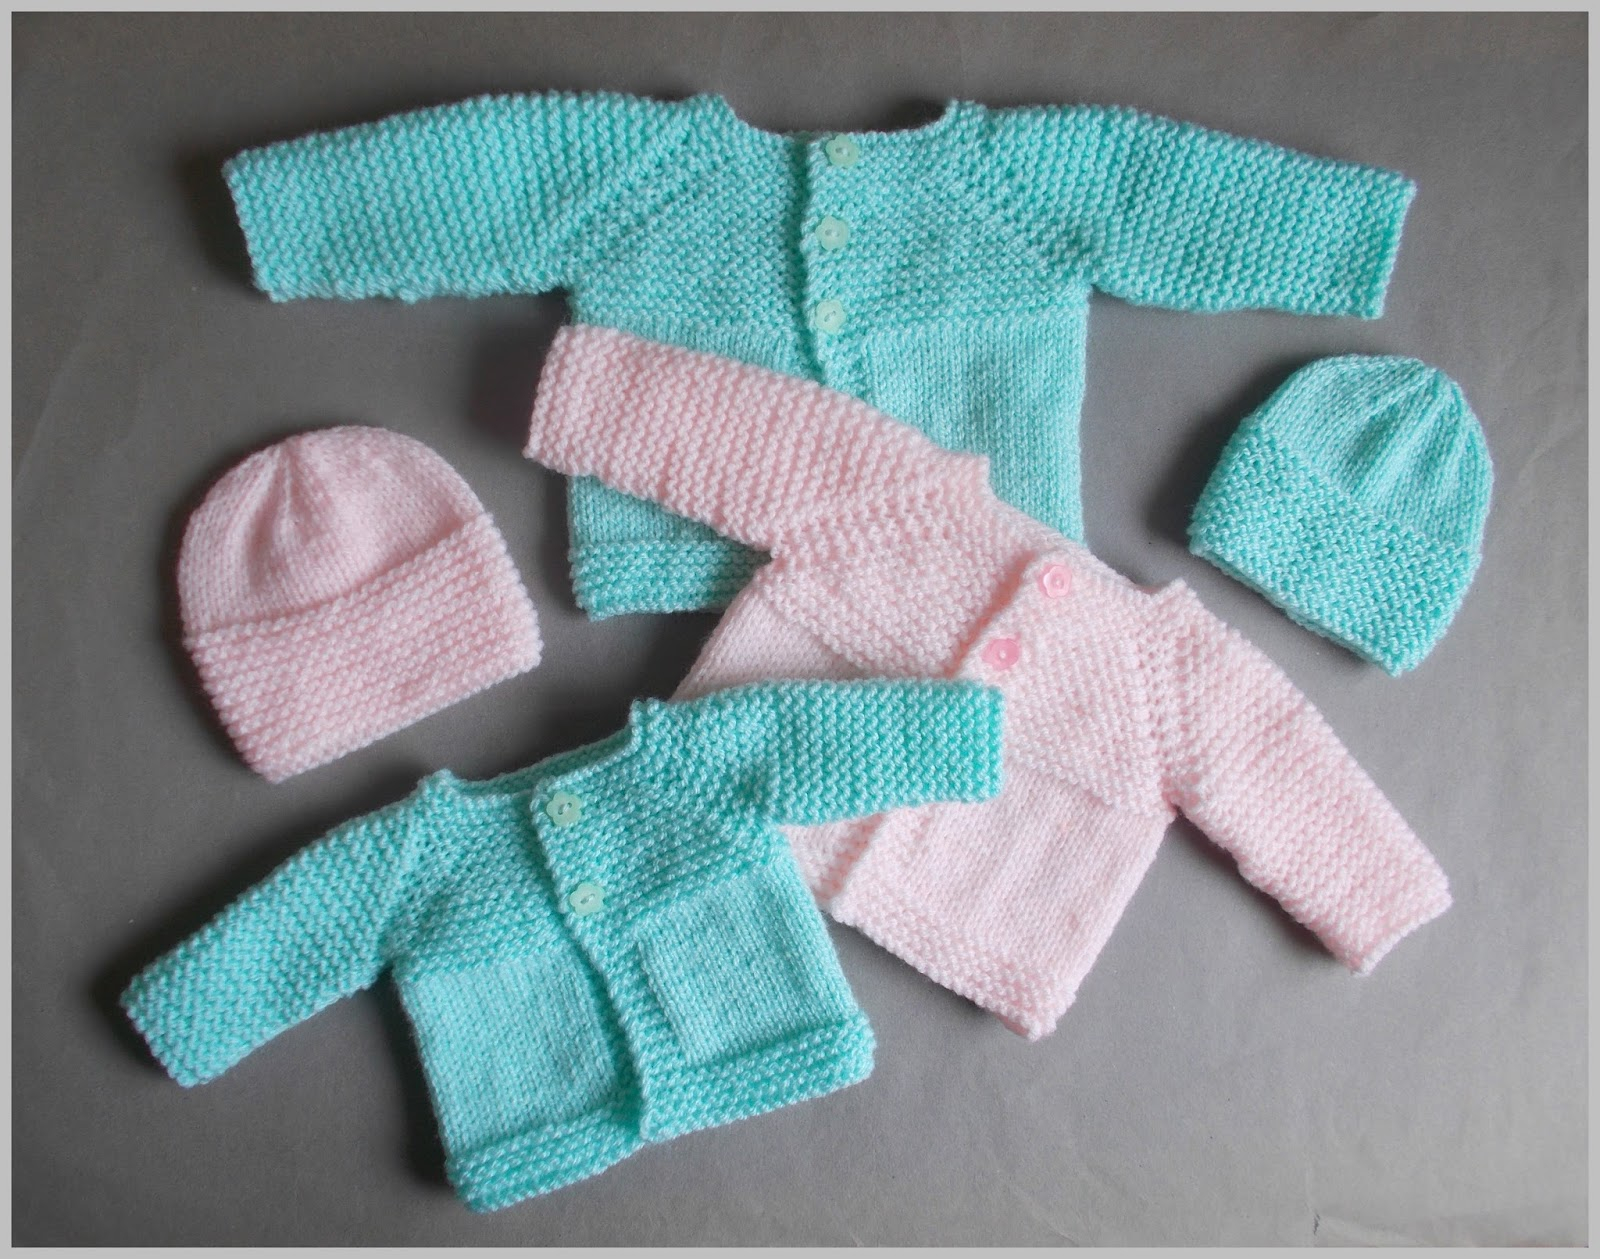 Free Knitting Patterns For Baby Sets Free Knitting Patterns Ba Sweater Sets